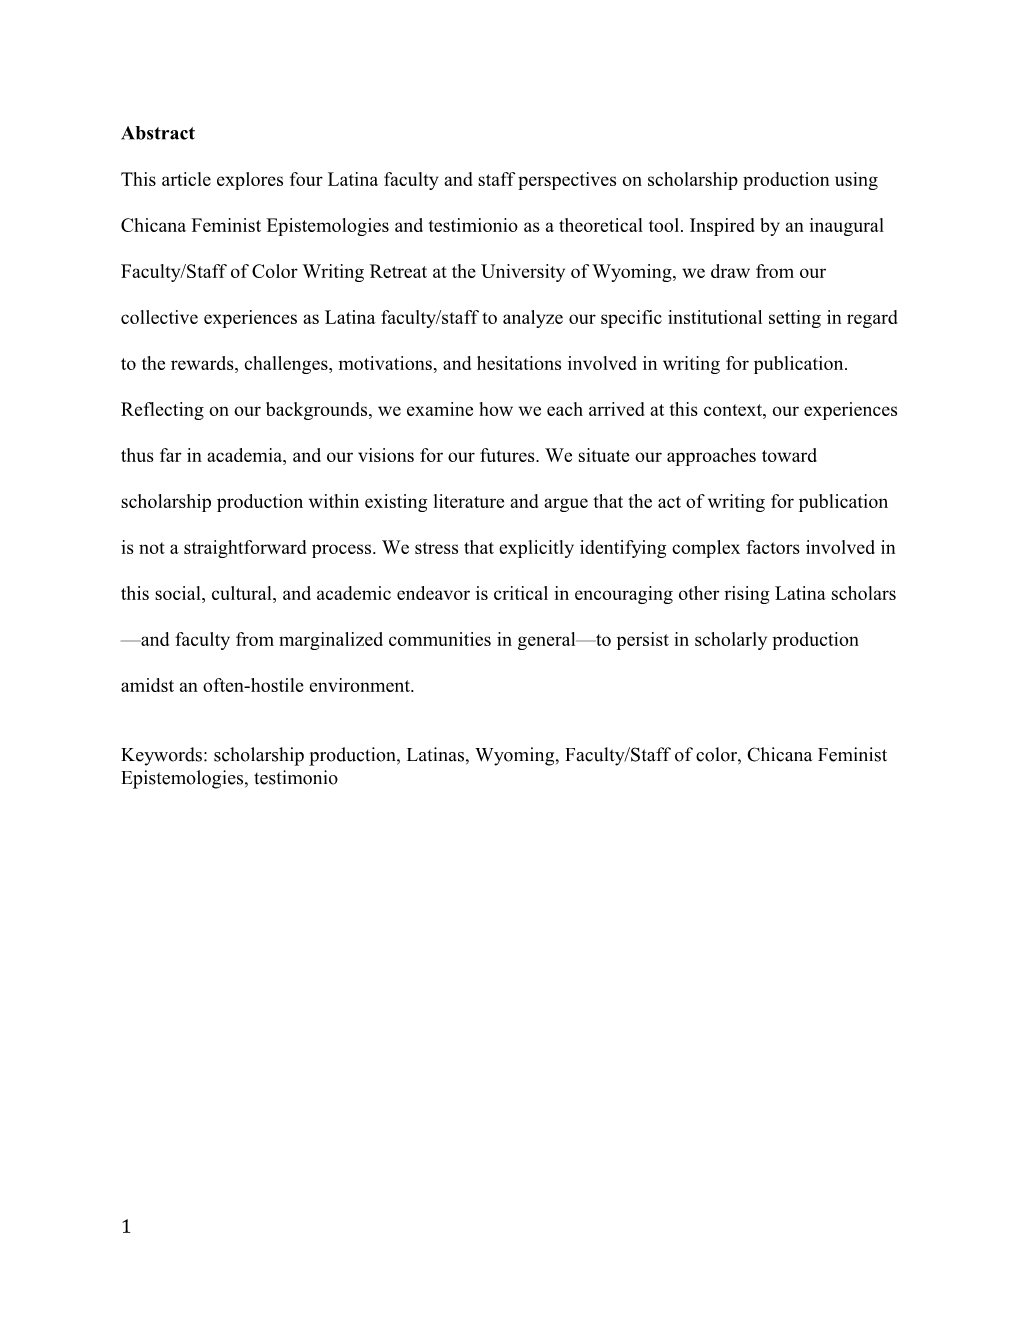 Latina Faculty/Staff Testimonios on Scholarly Production